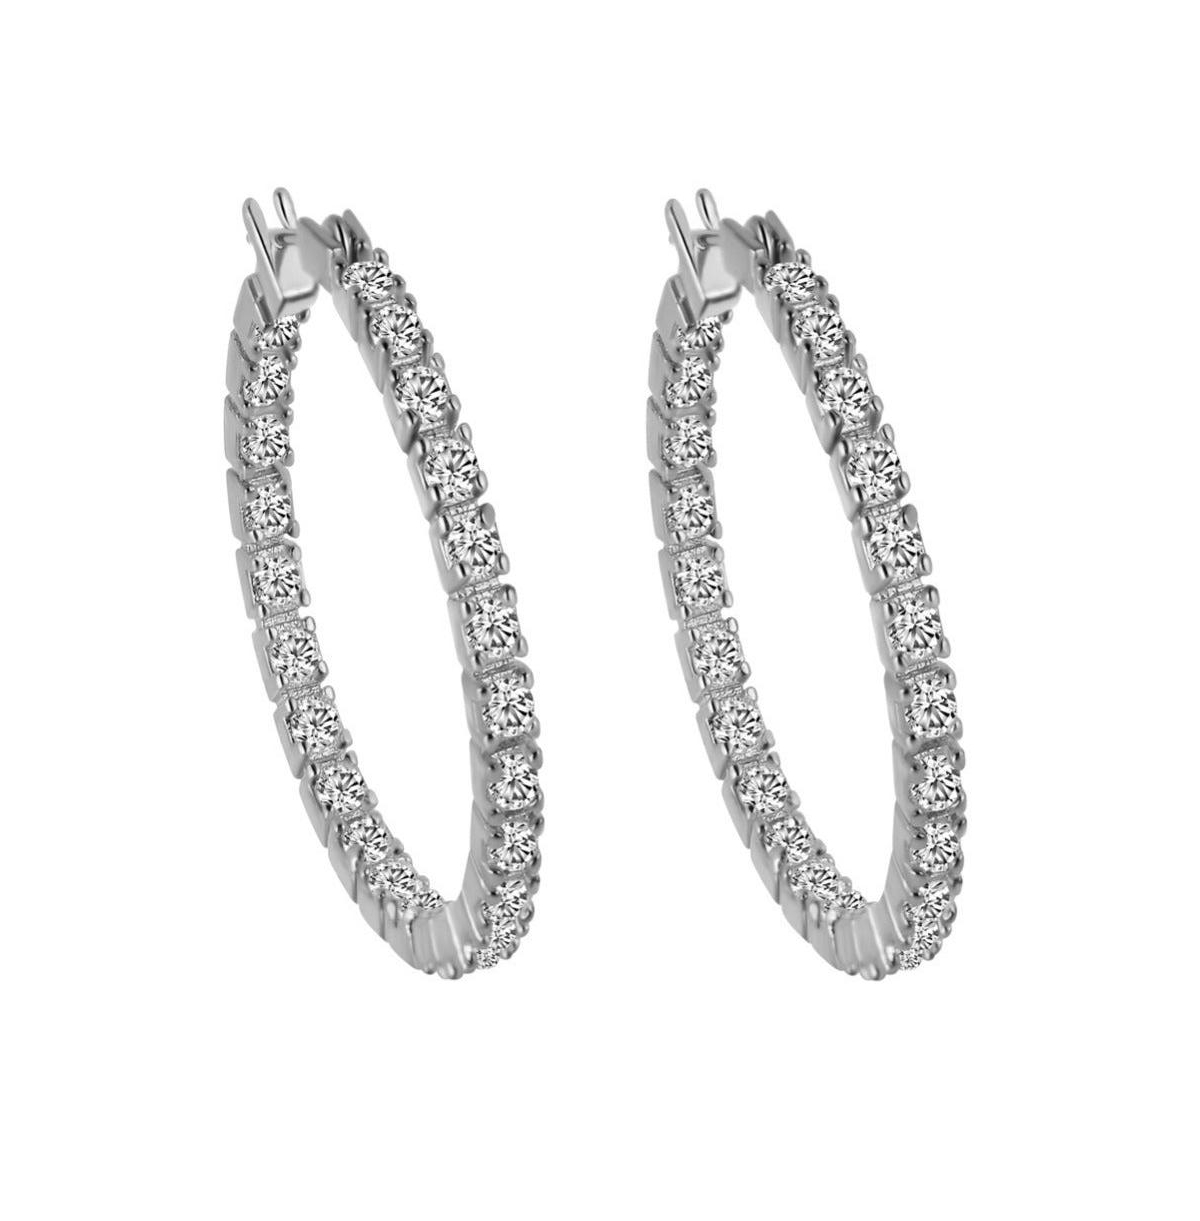 Crystal Hoop Earrings for Women - Silver